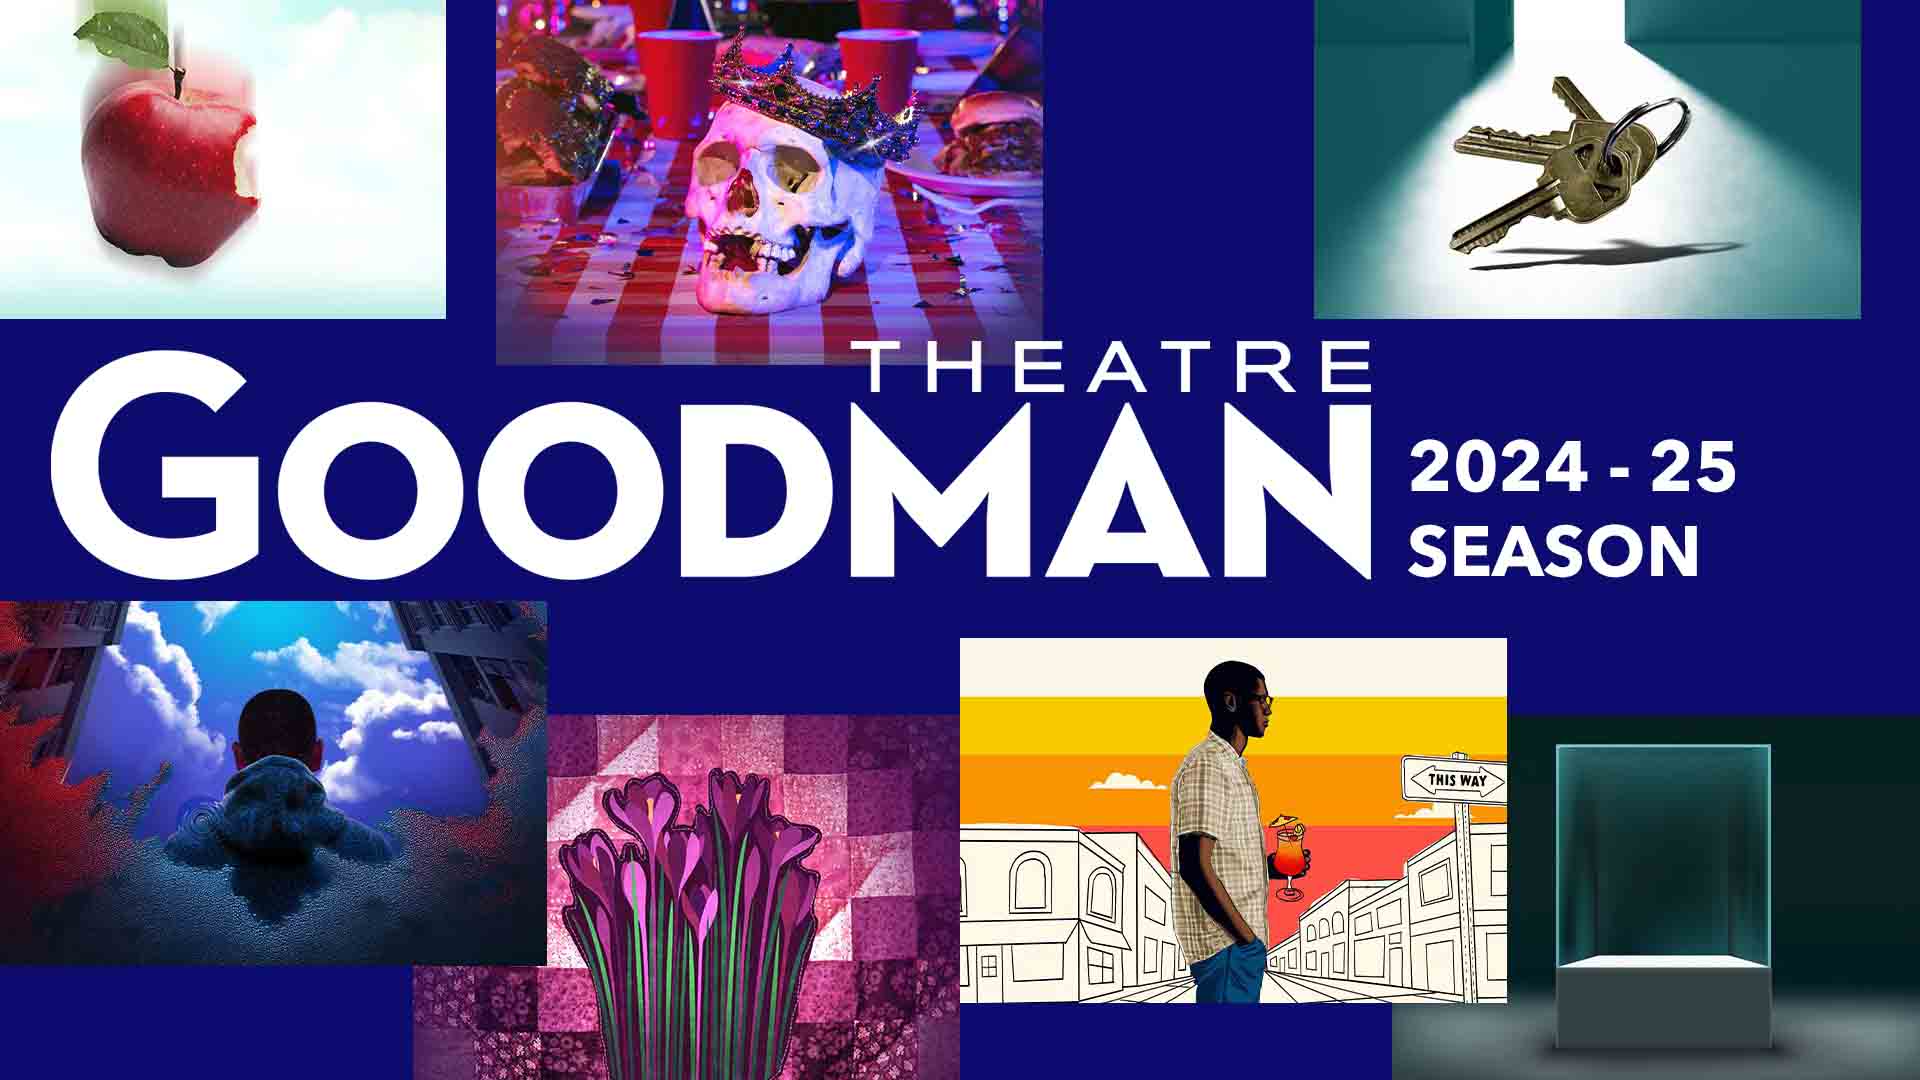 Introducing The Goodman Theatre's 2024-2025 SEASON